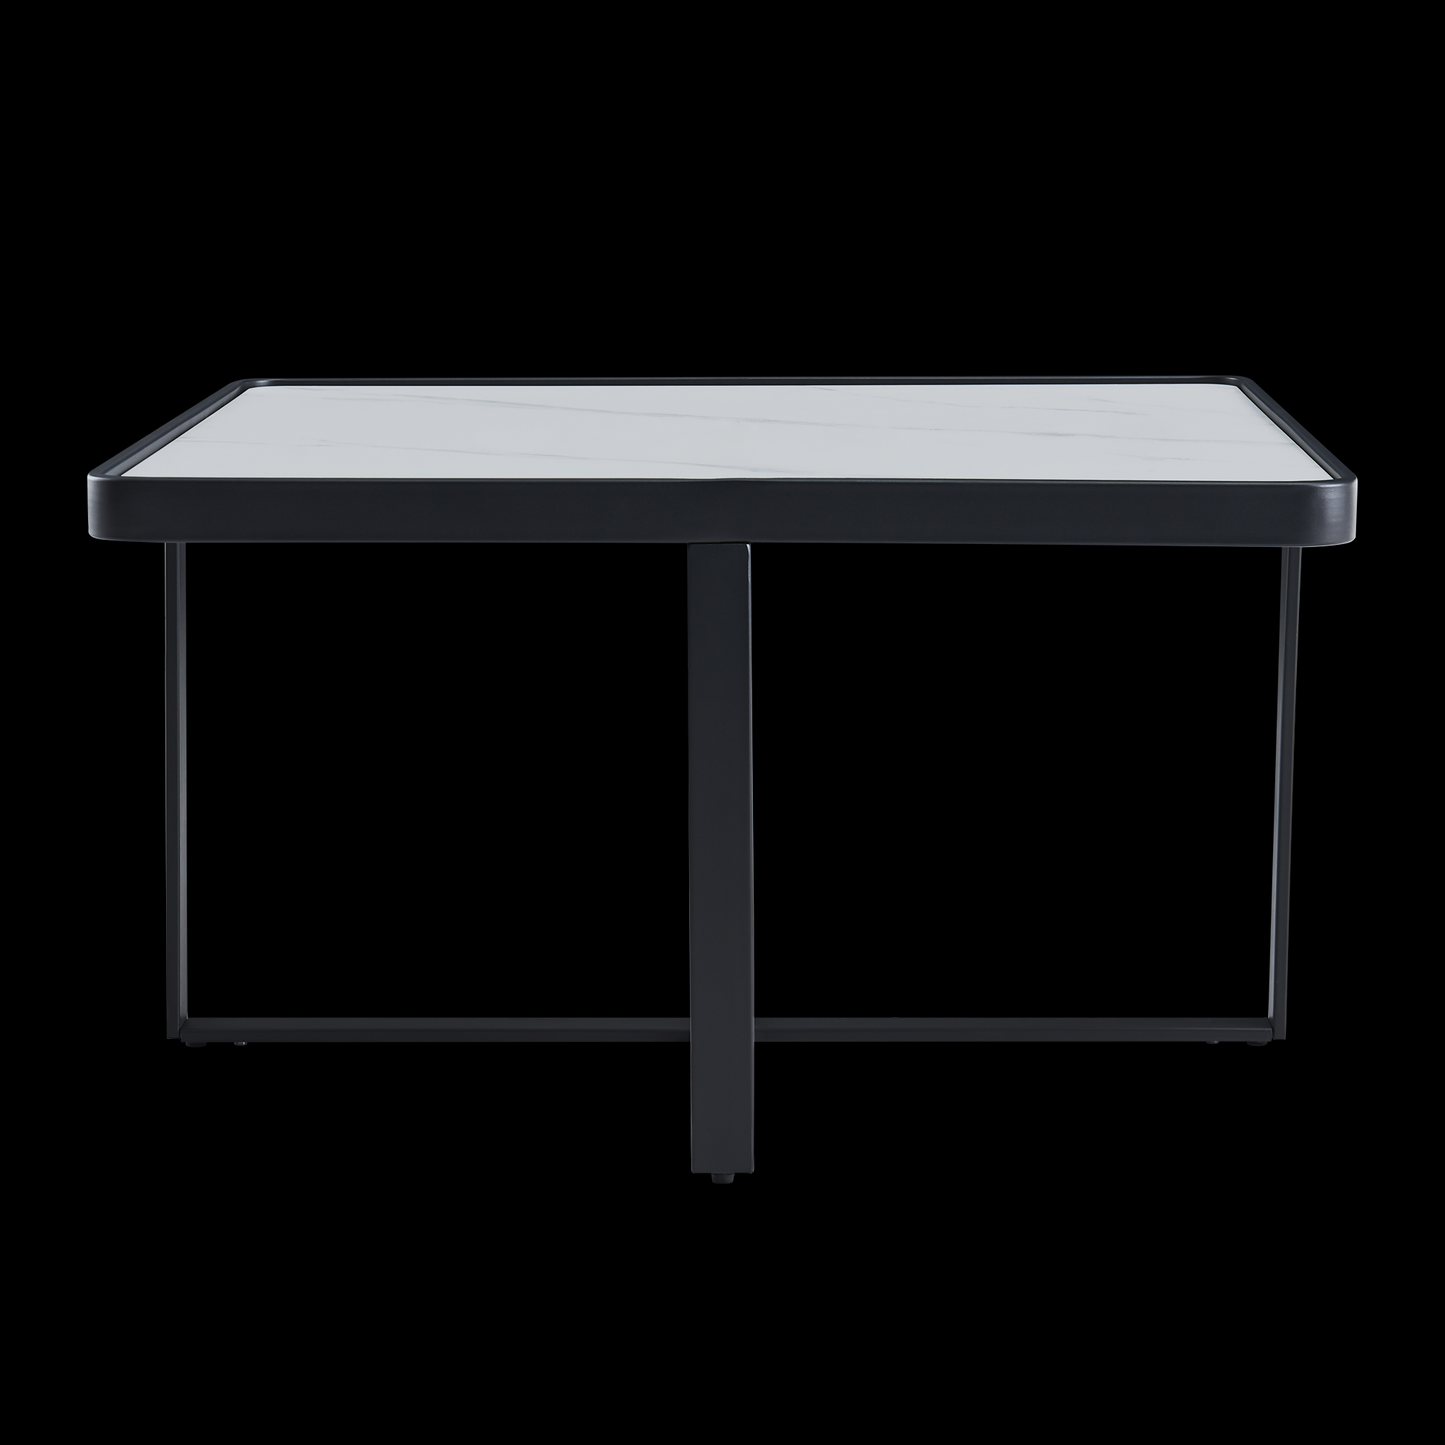 Minimalist Square Coffee Table, Black Metal Frame, Sintered Stone Top